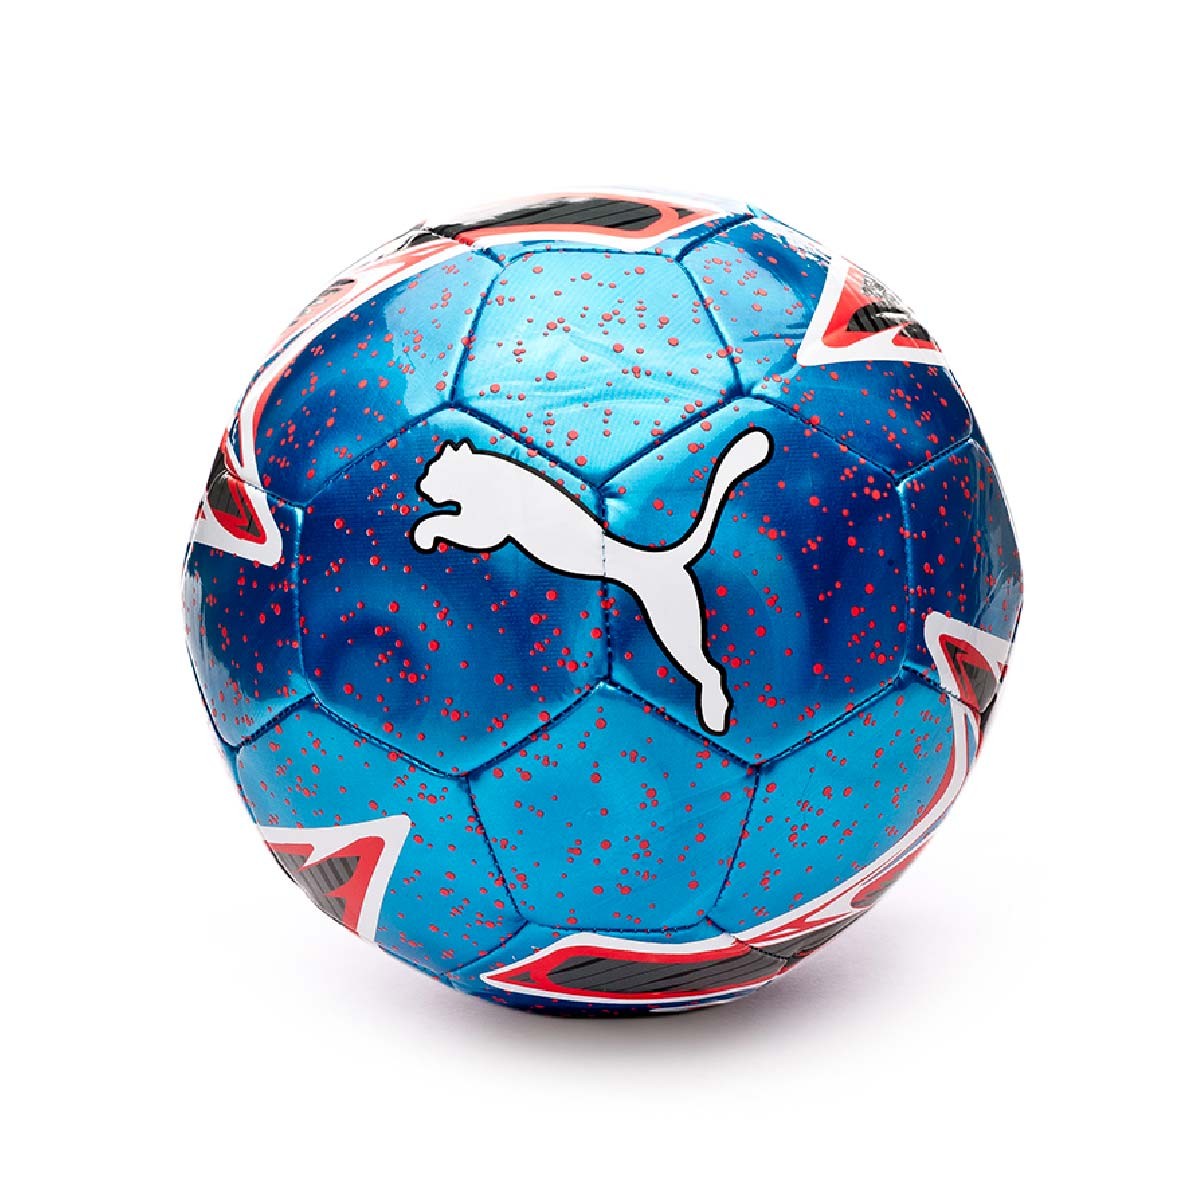 Ball Puma One Laser Bleu azur-Red blast 